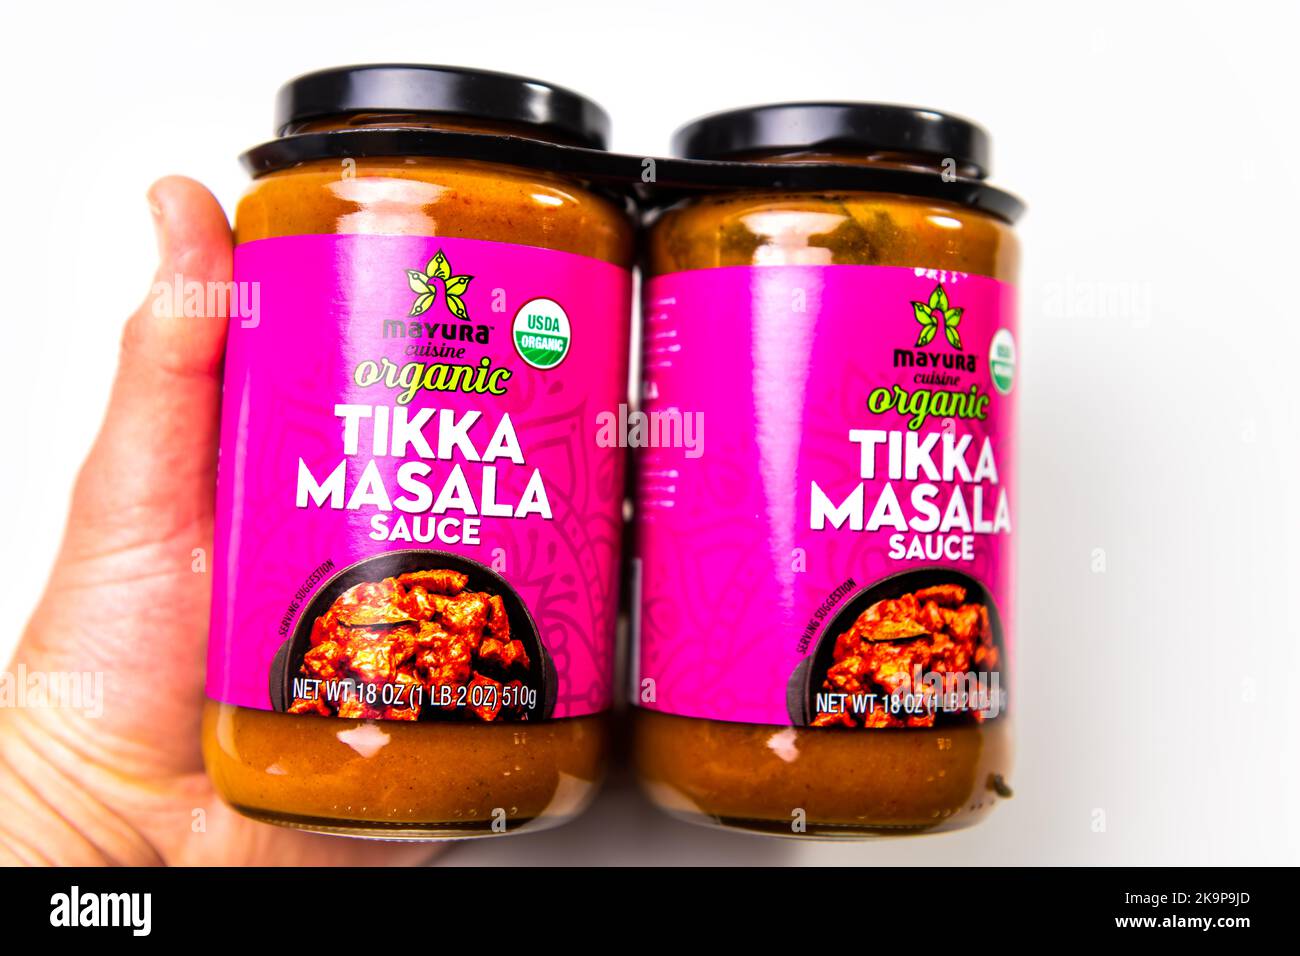 Naples, USA - October 21, 2021: Closeup macro hand holding Costco bulk tikka masala organic sauce in bottles jars by Mayura cuisine Indian spice food Stock Photo